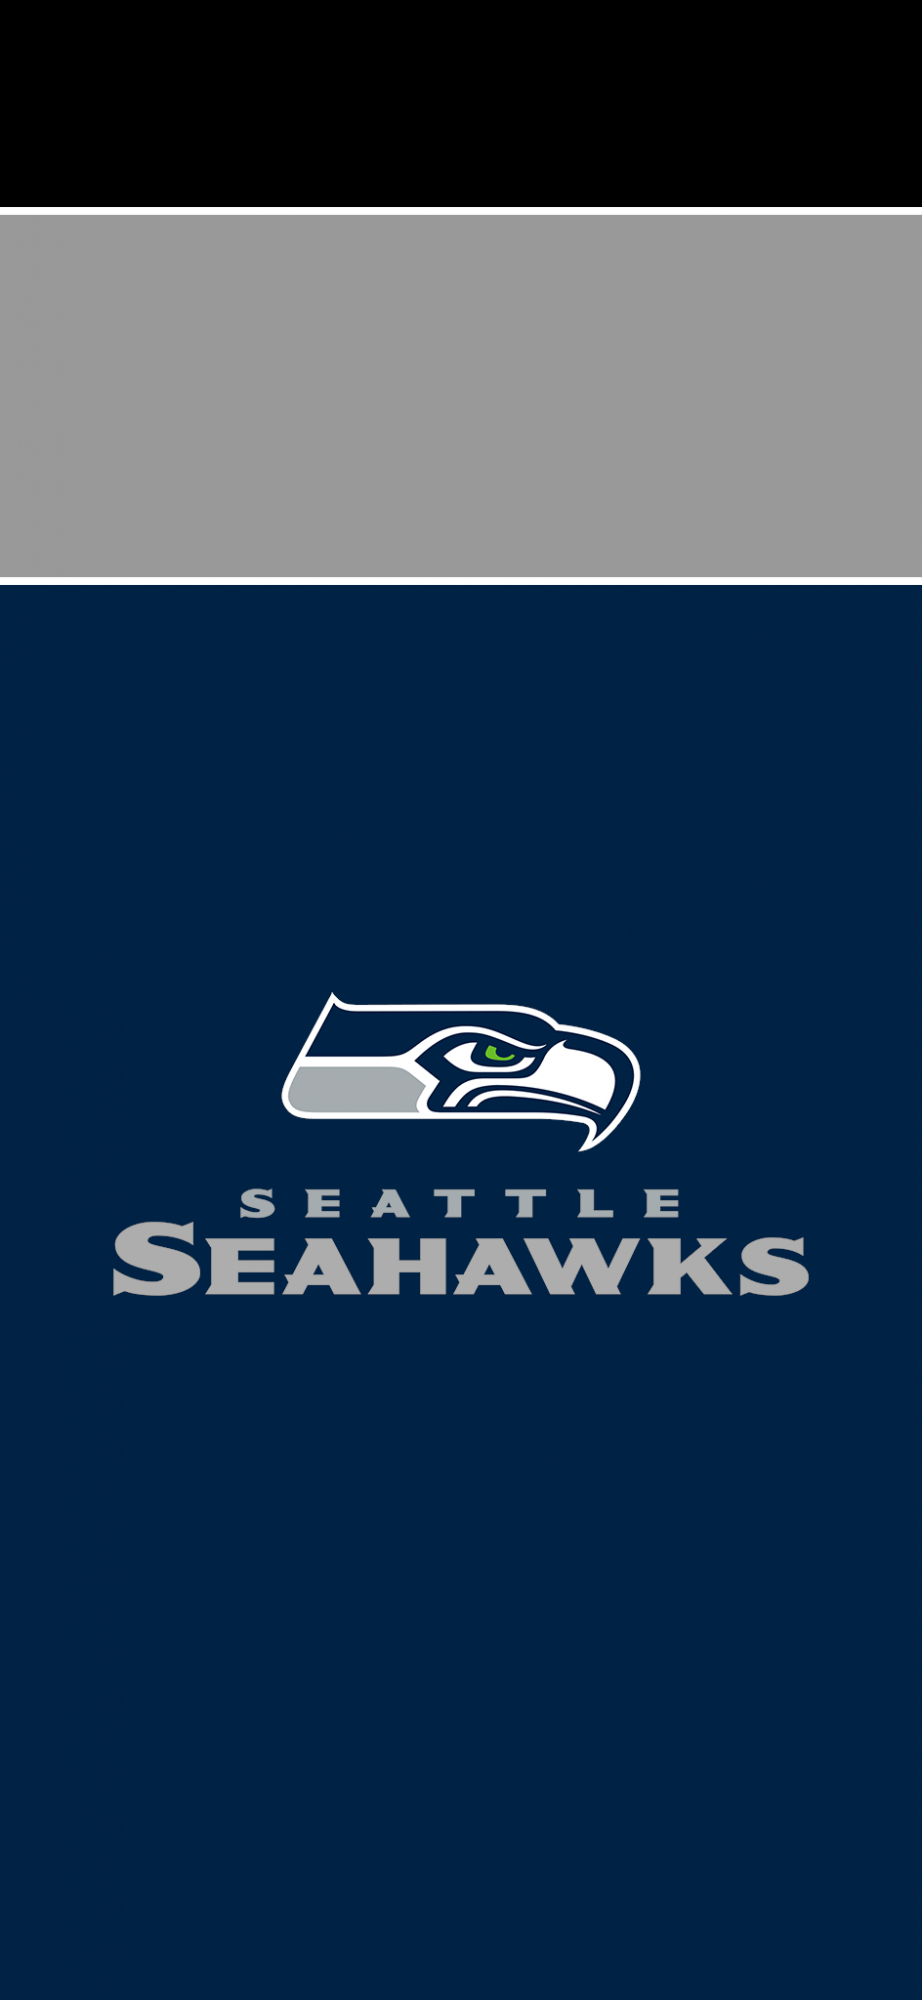 My Seahawks lock screen wallpaper